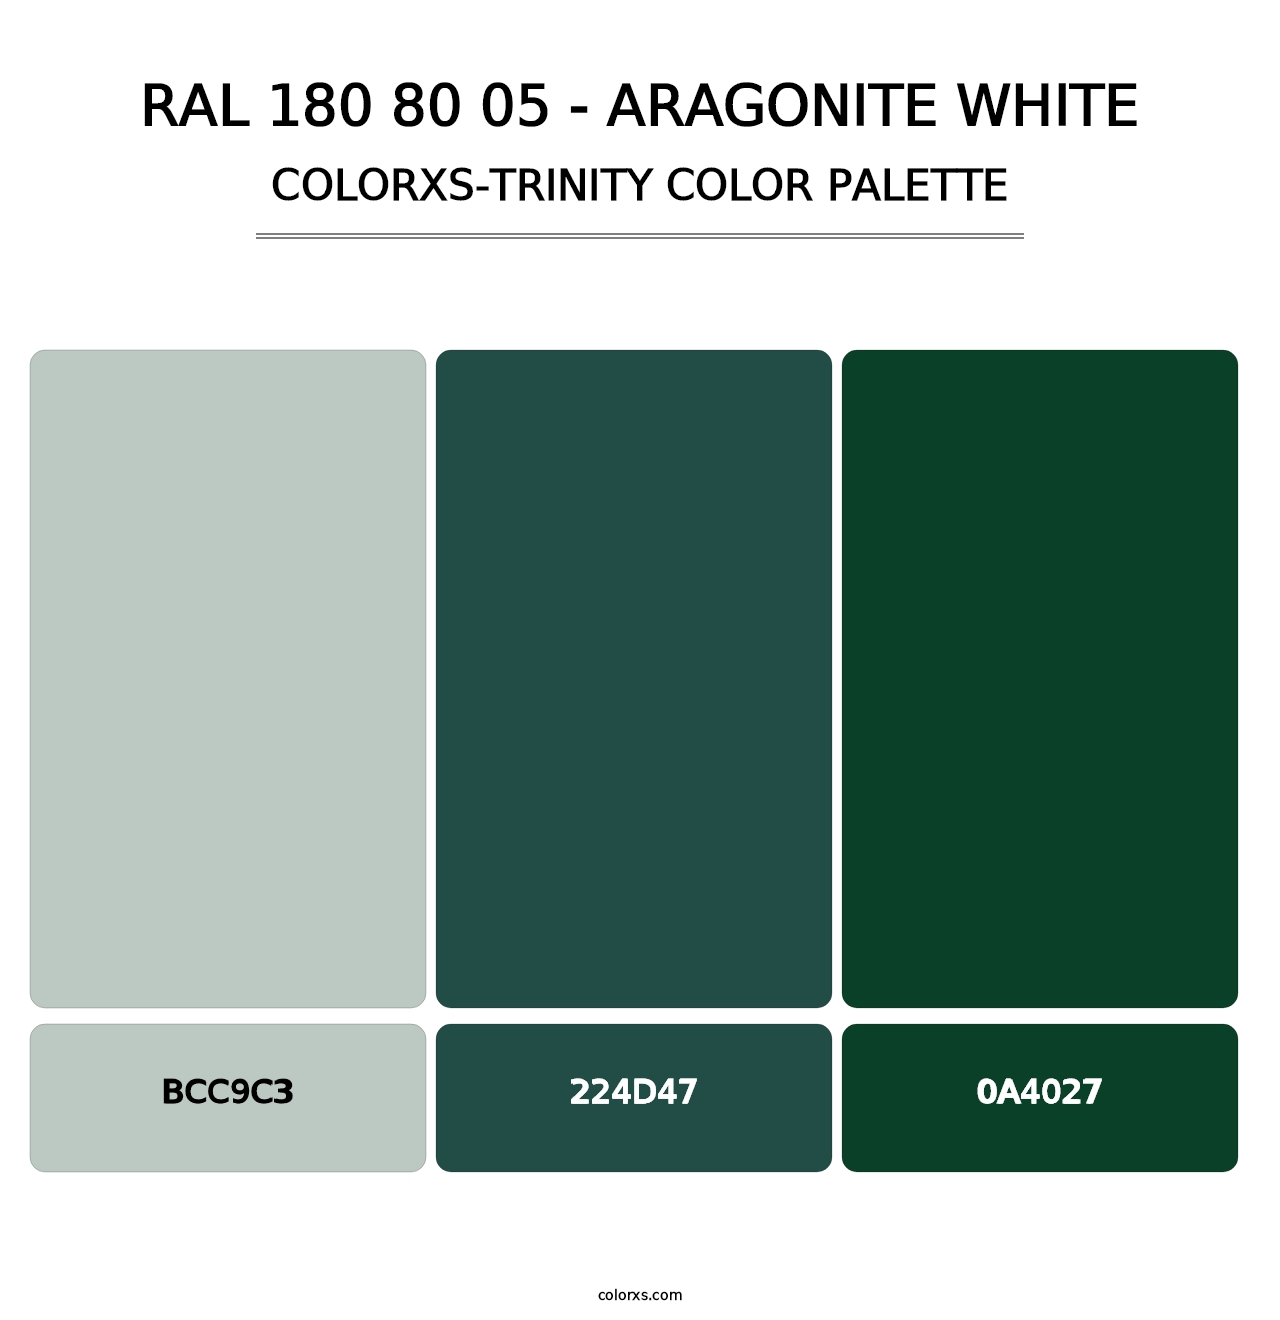 RAL 180 80 05 - Aragonite White - Colorxs Trinity Palette